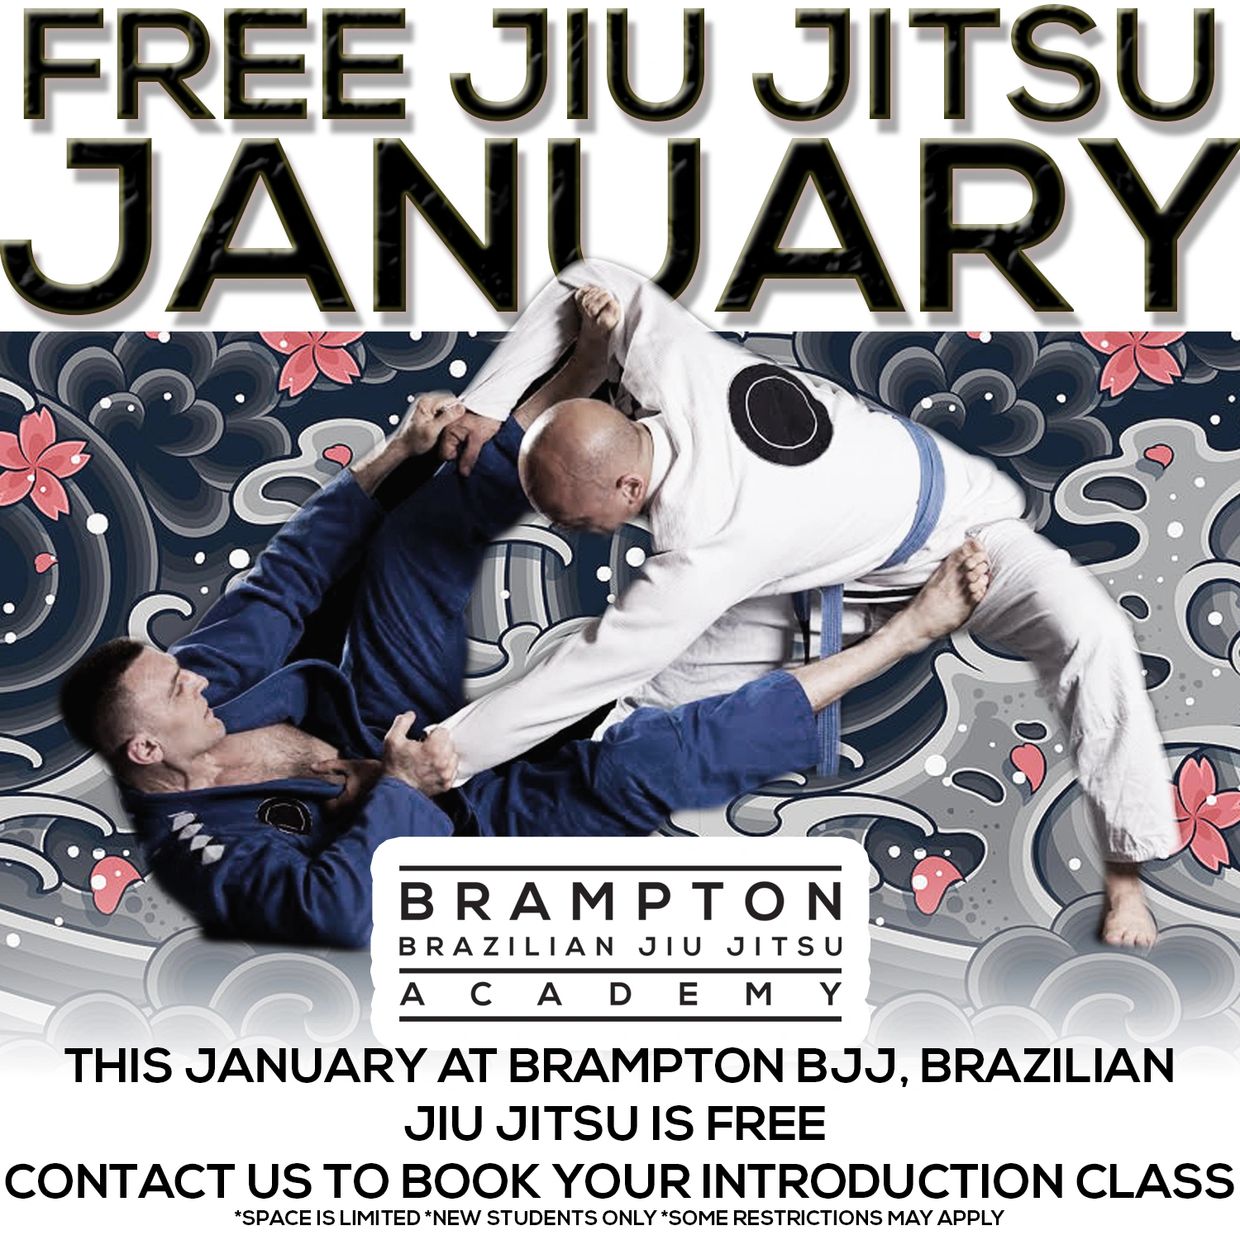 Brampton BJJ, Brazilian Jiu Jitsu, Free bjj classes january, neo bjj, martial arts, mississauga